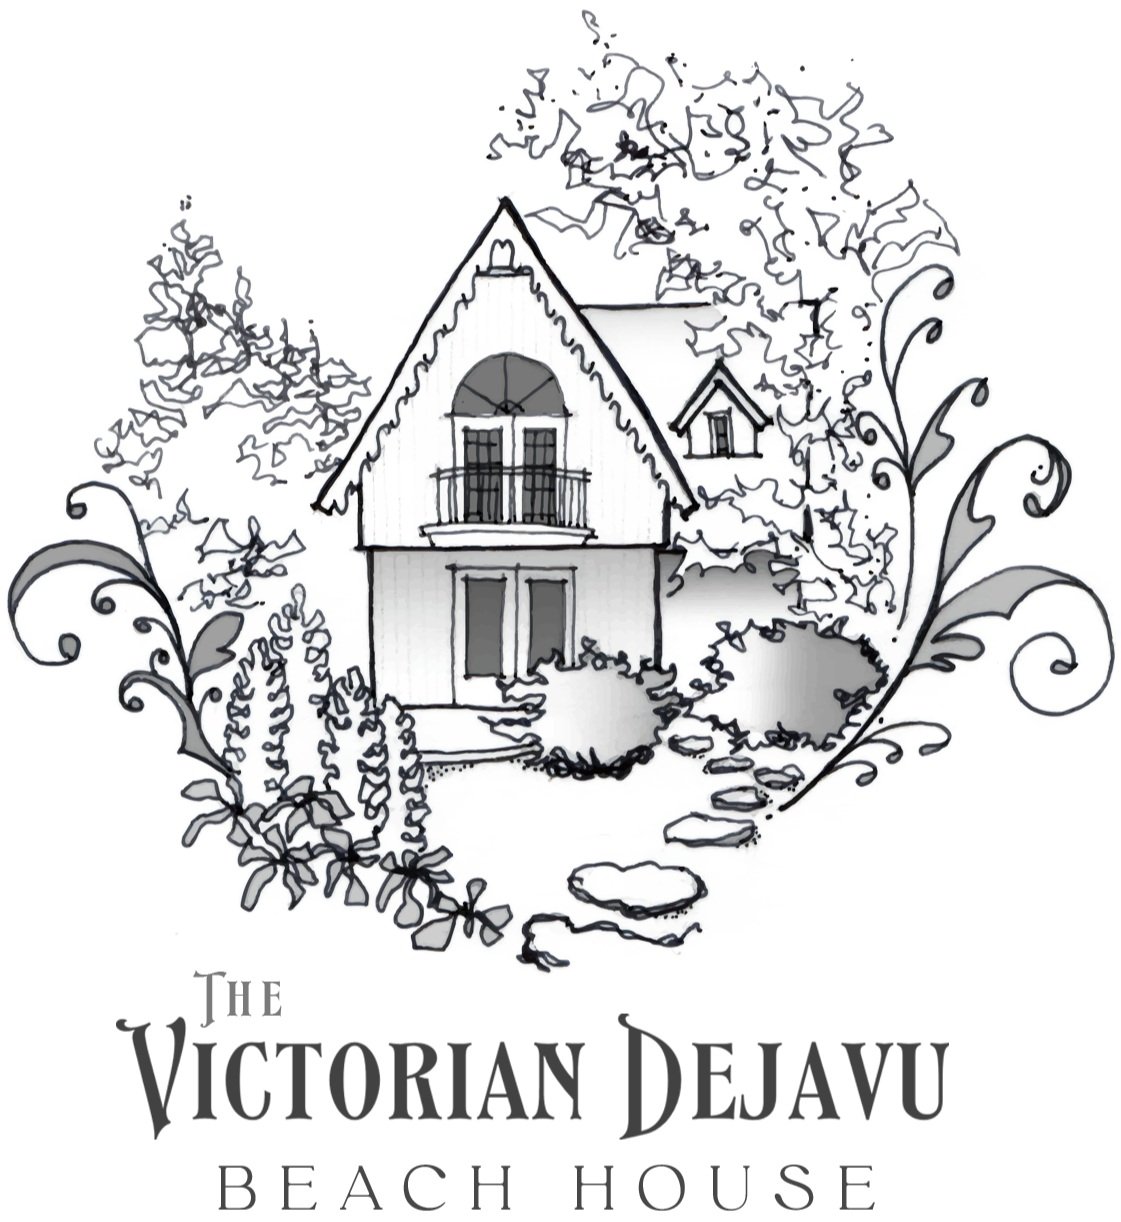 The Victorian Dejavu Beach House